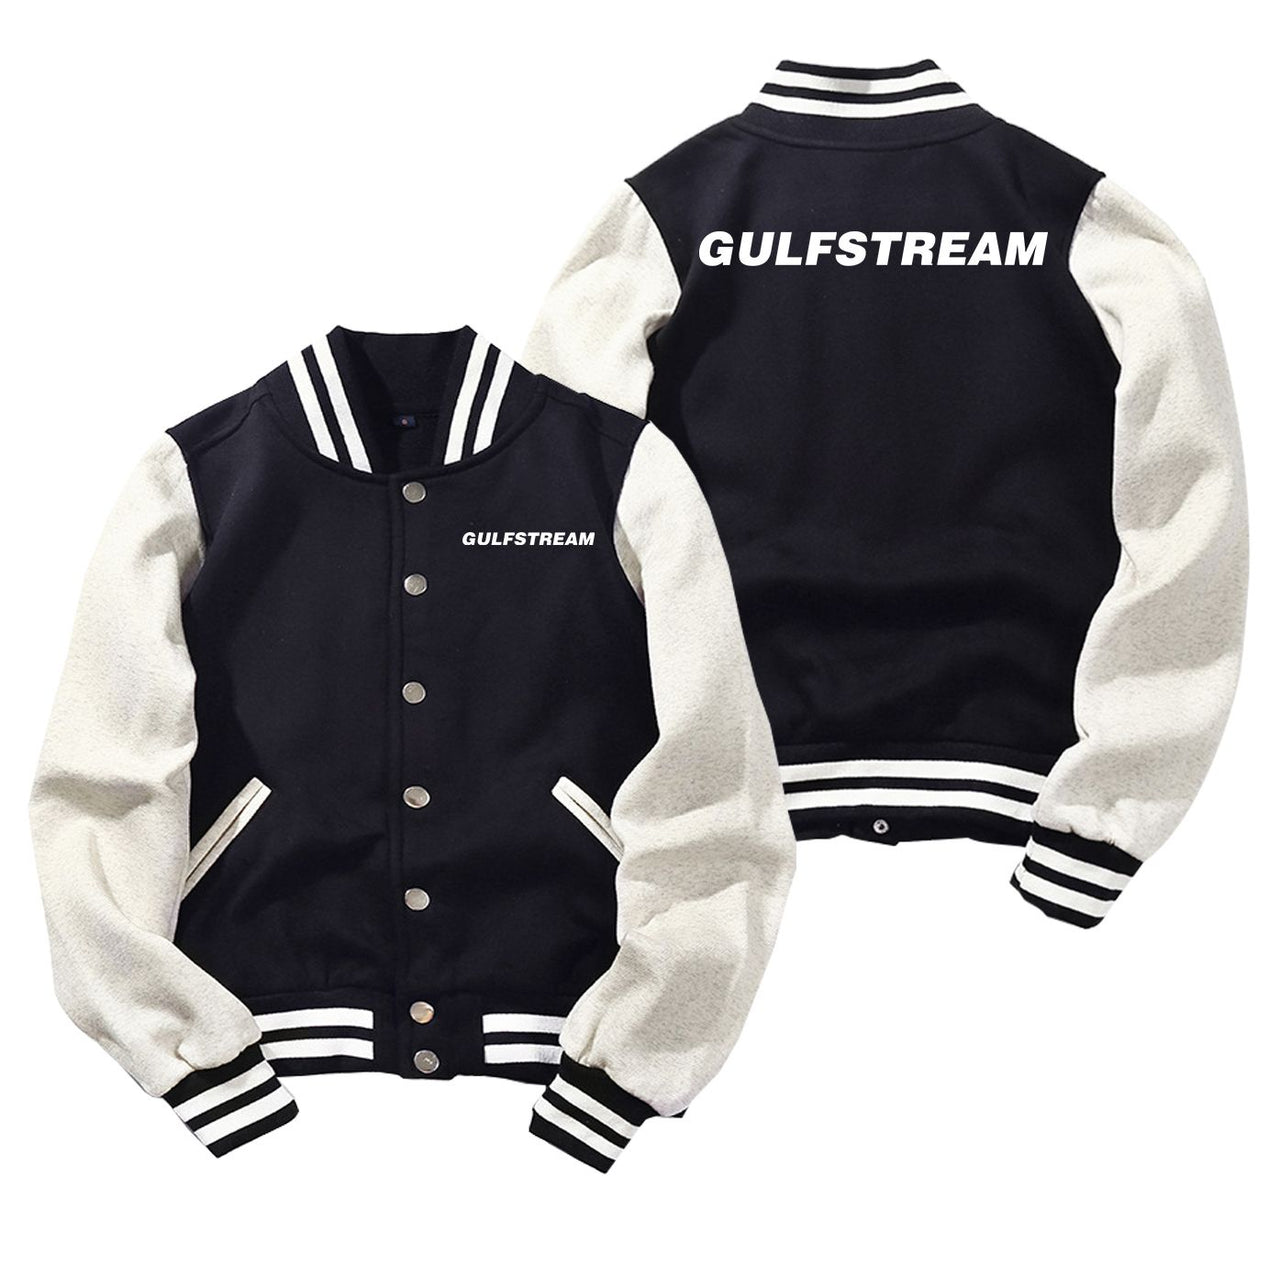 Gulfstream & Text Designed Baseball Style Jackets